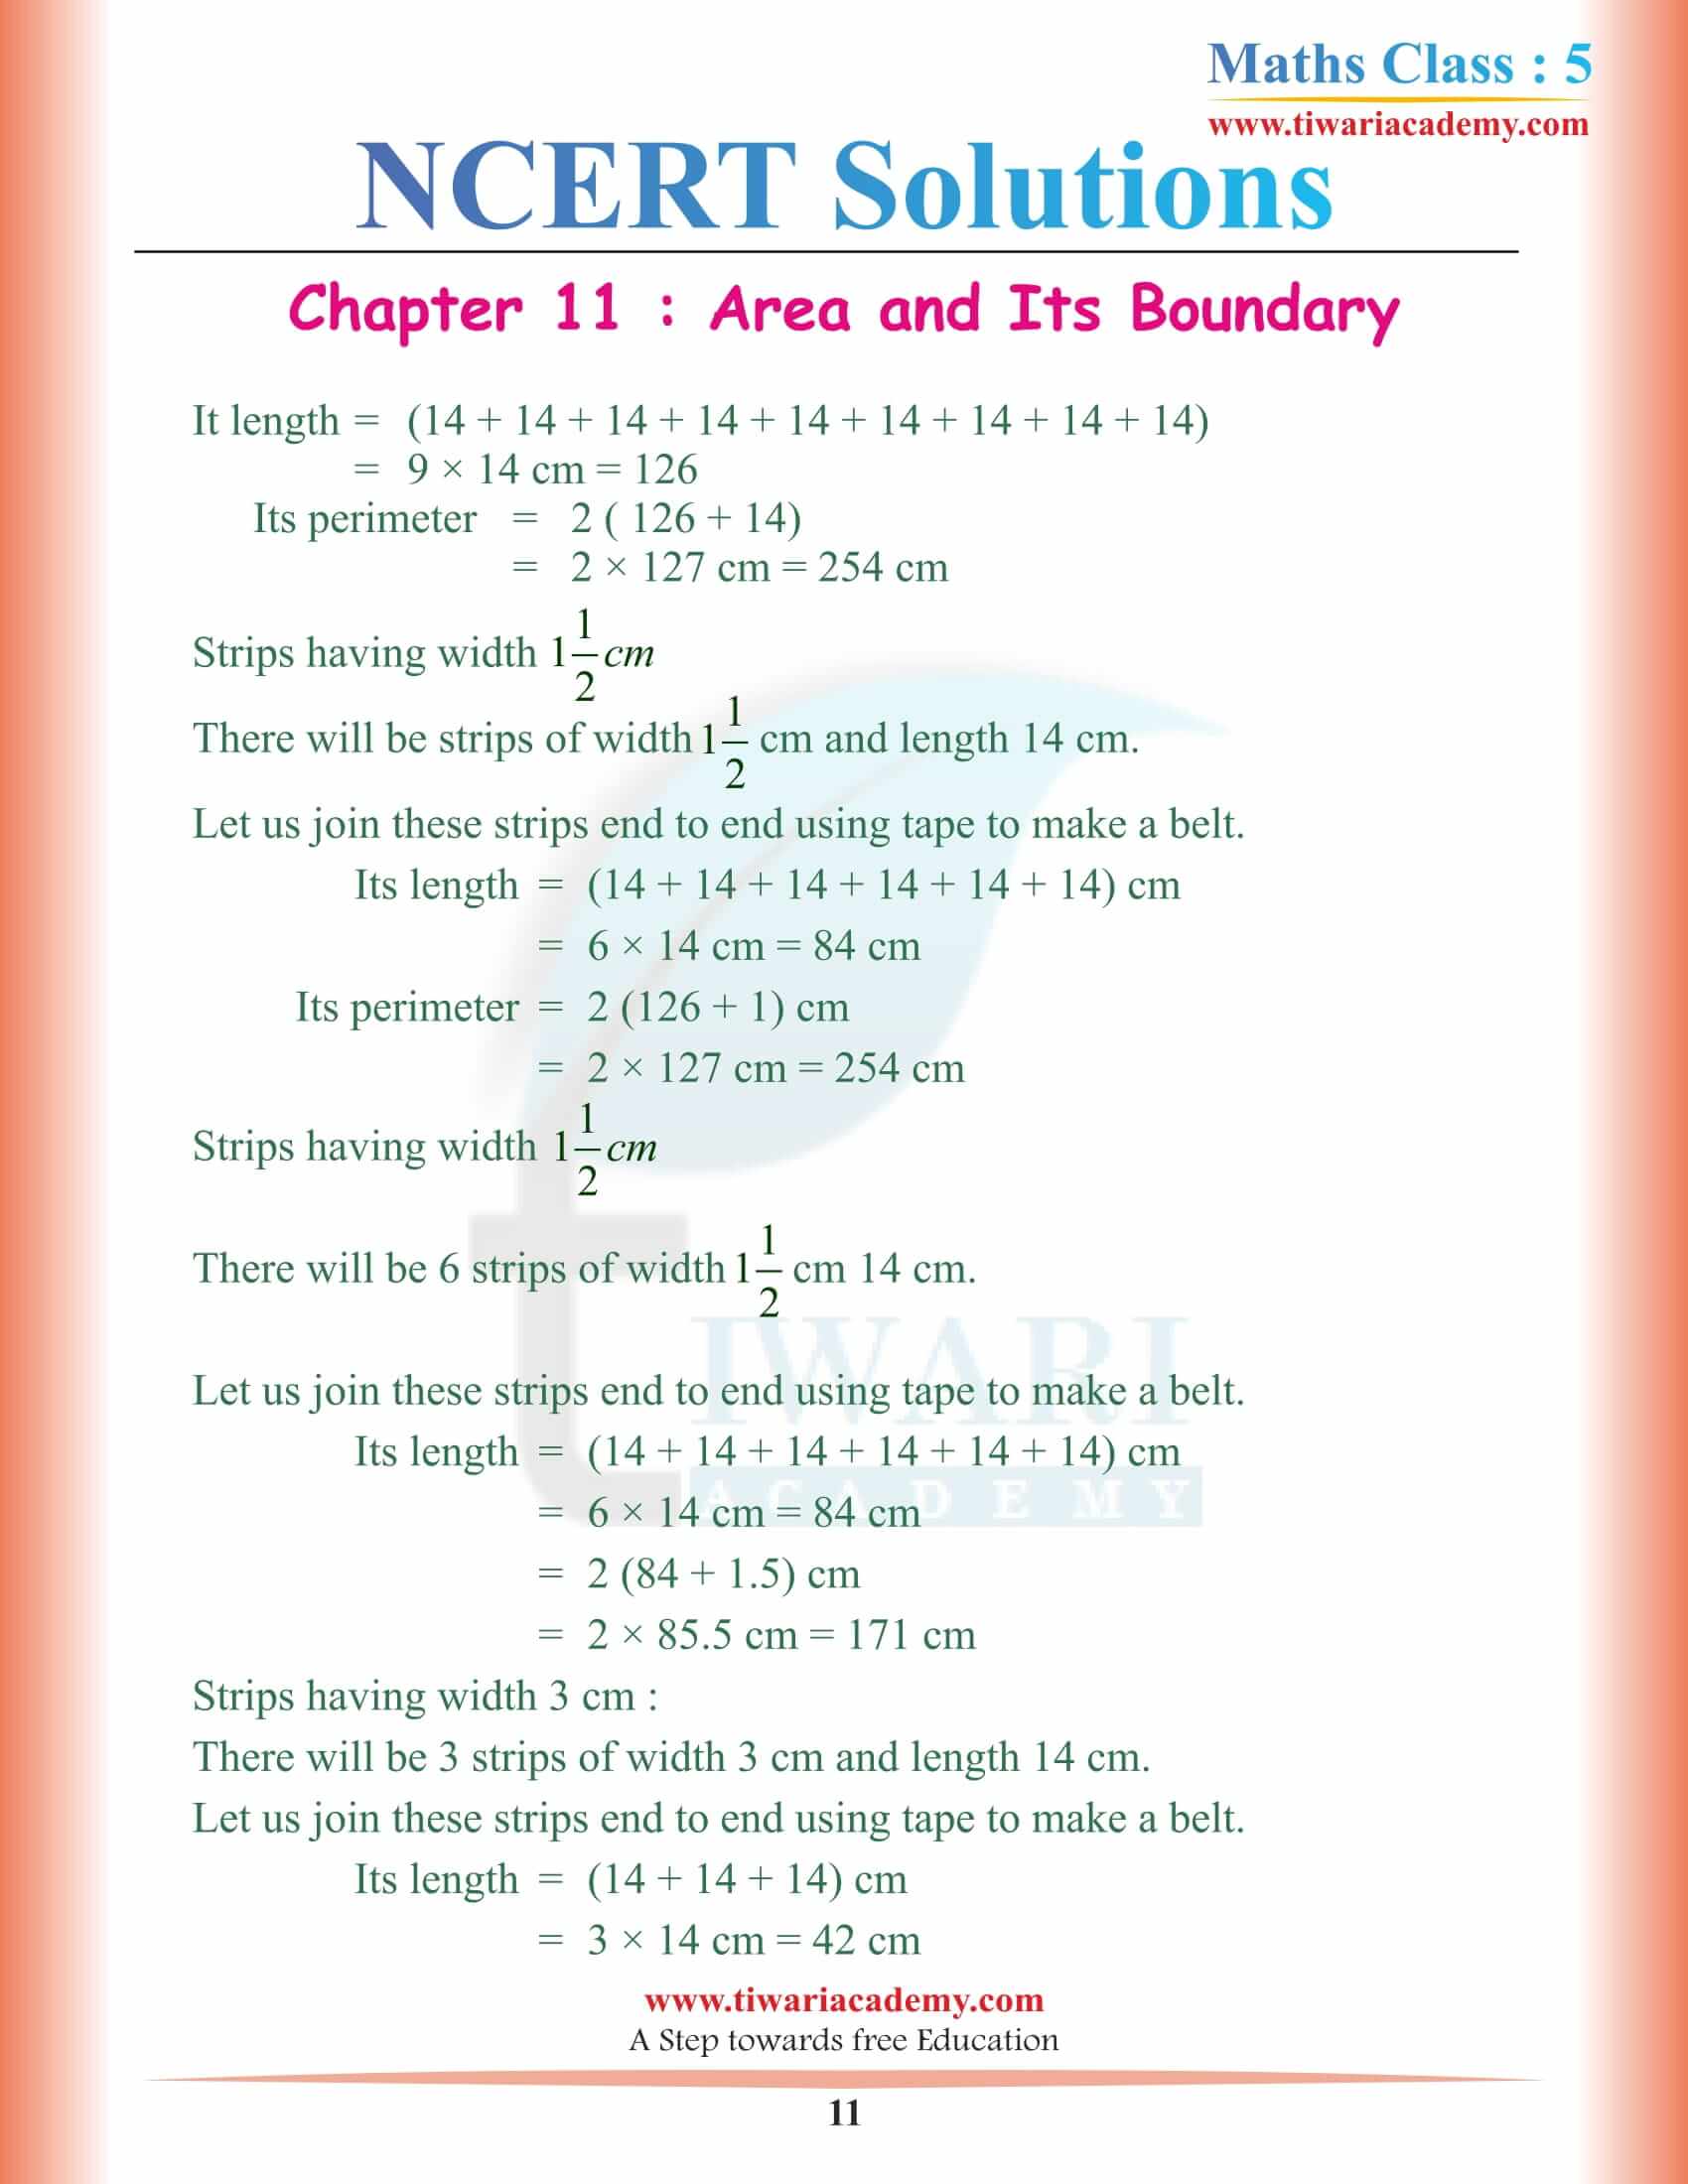 Class 5 Maths NCERT Chapter 11 Solutions Answers